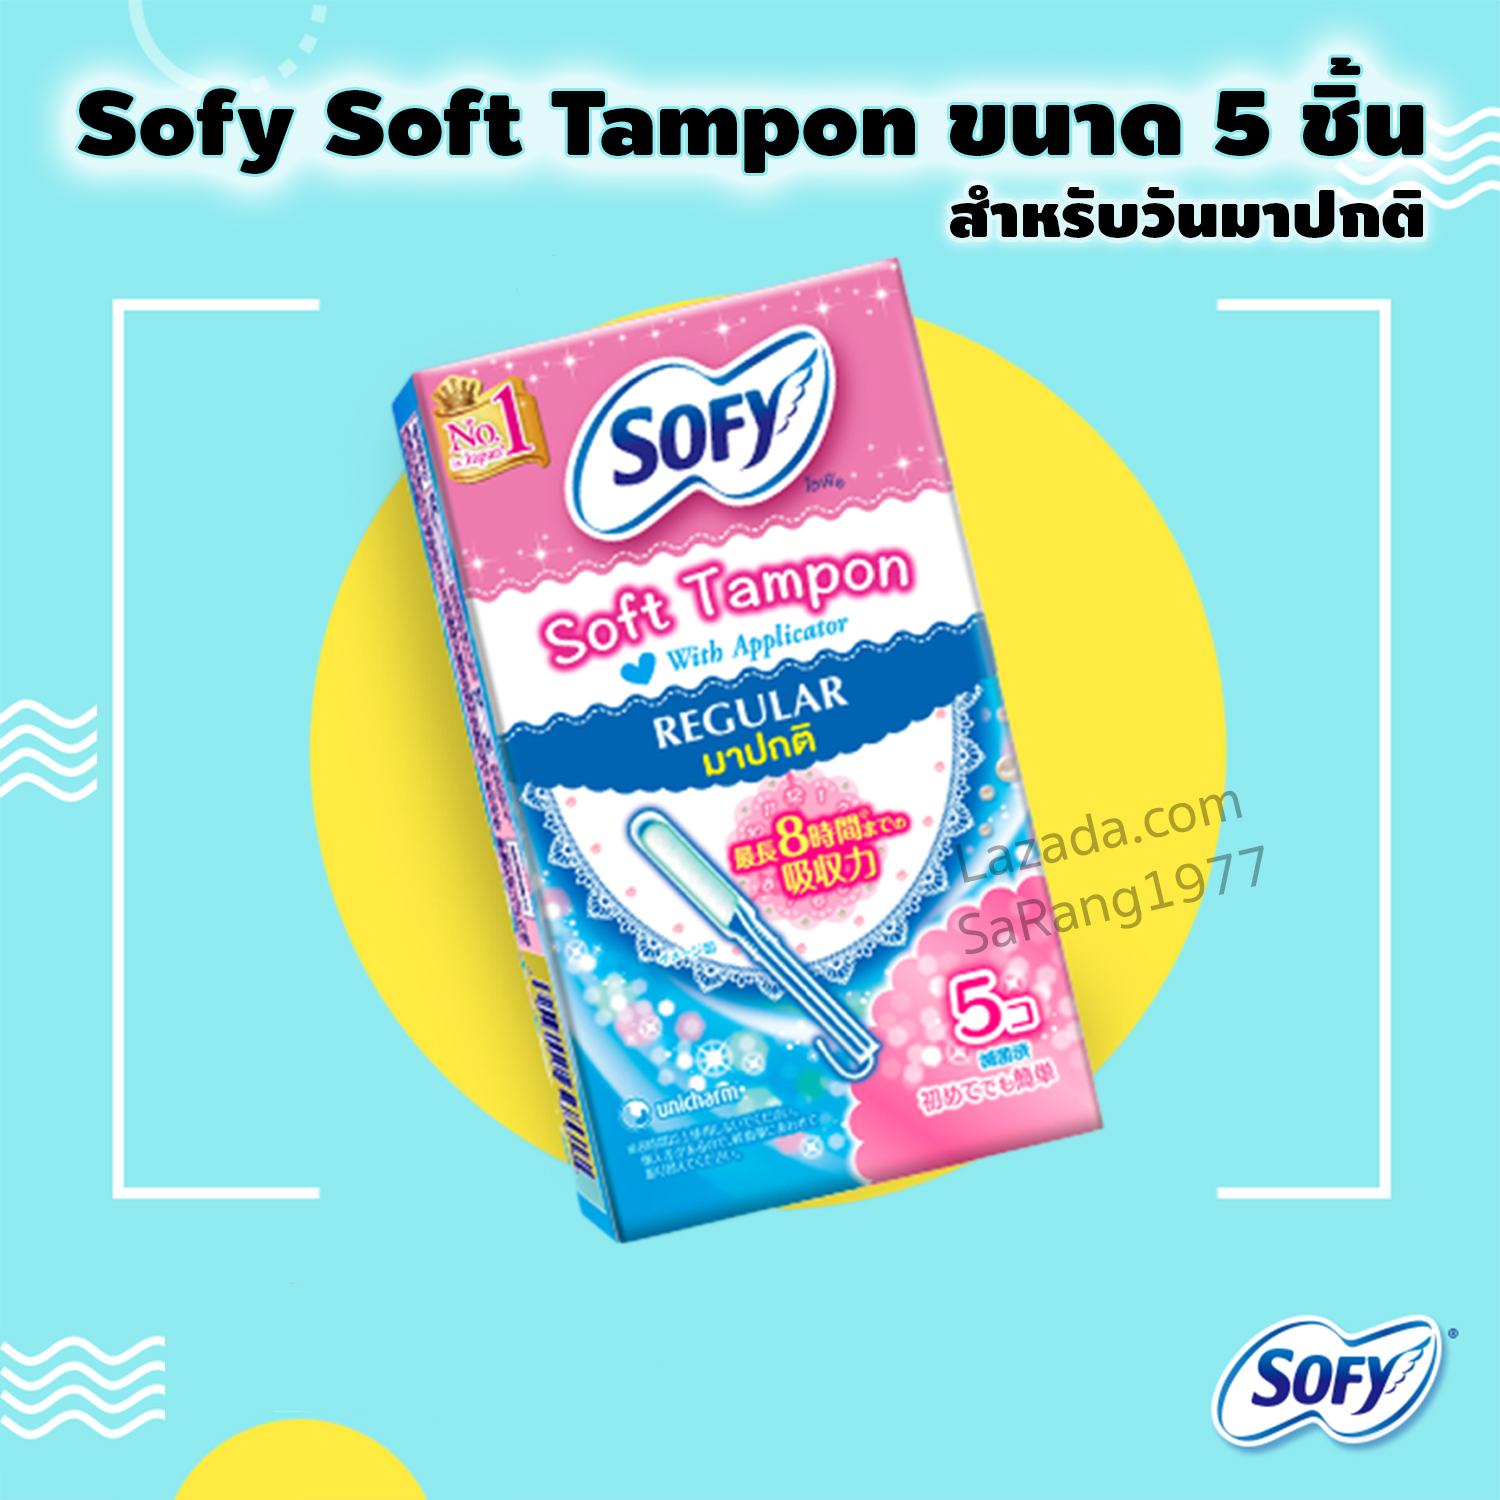 Sofy Soft Tampon with Applicator Regular 5pcs ผ้าอนามัยแบบสอด สำหรับวันมาปกติรุ่น 5ชิ้น